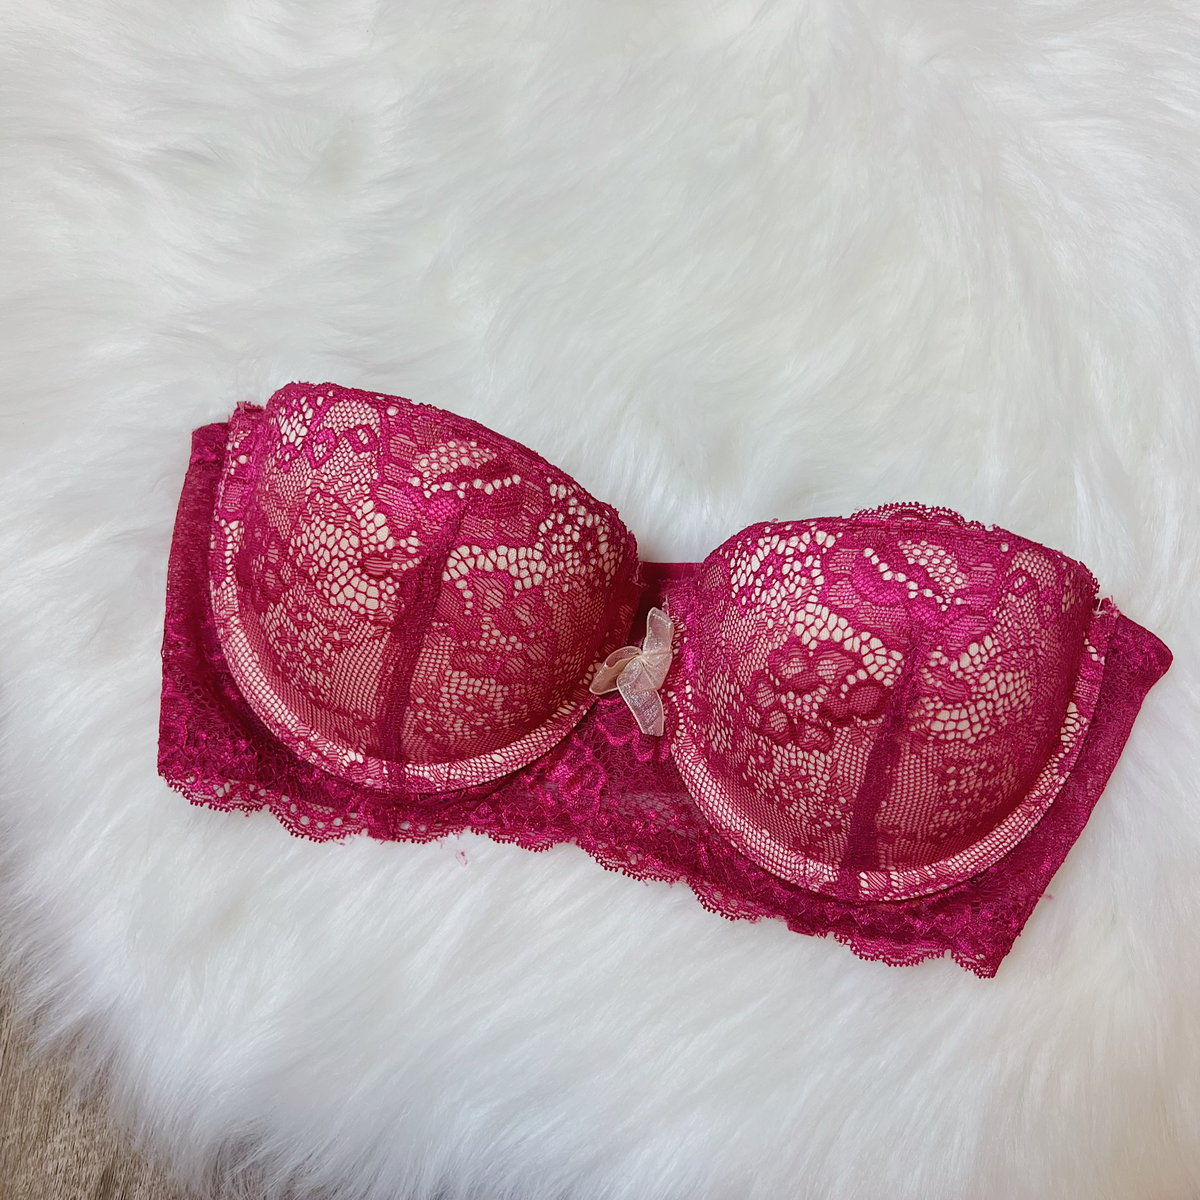 Size 34C/32D - Victoria's Secret Sexy Little Things Lace Push Up